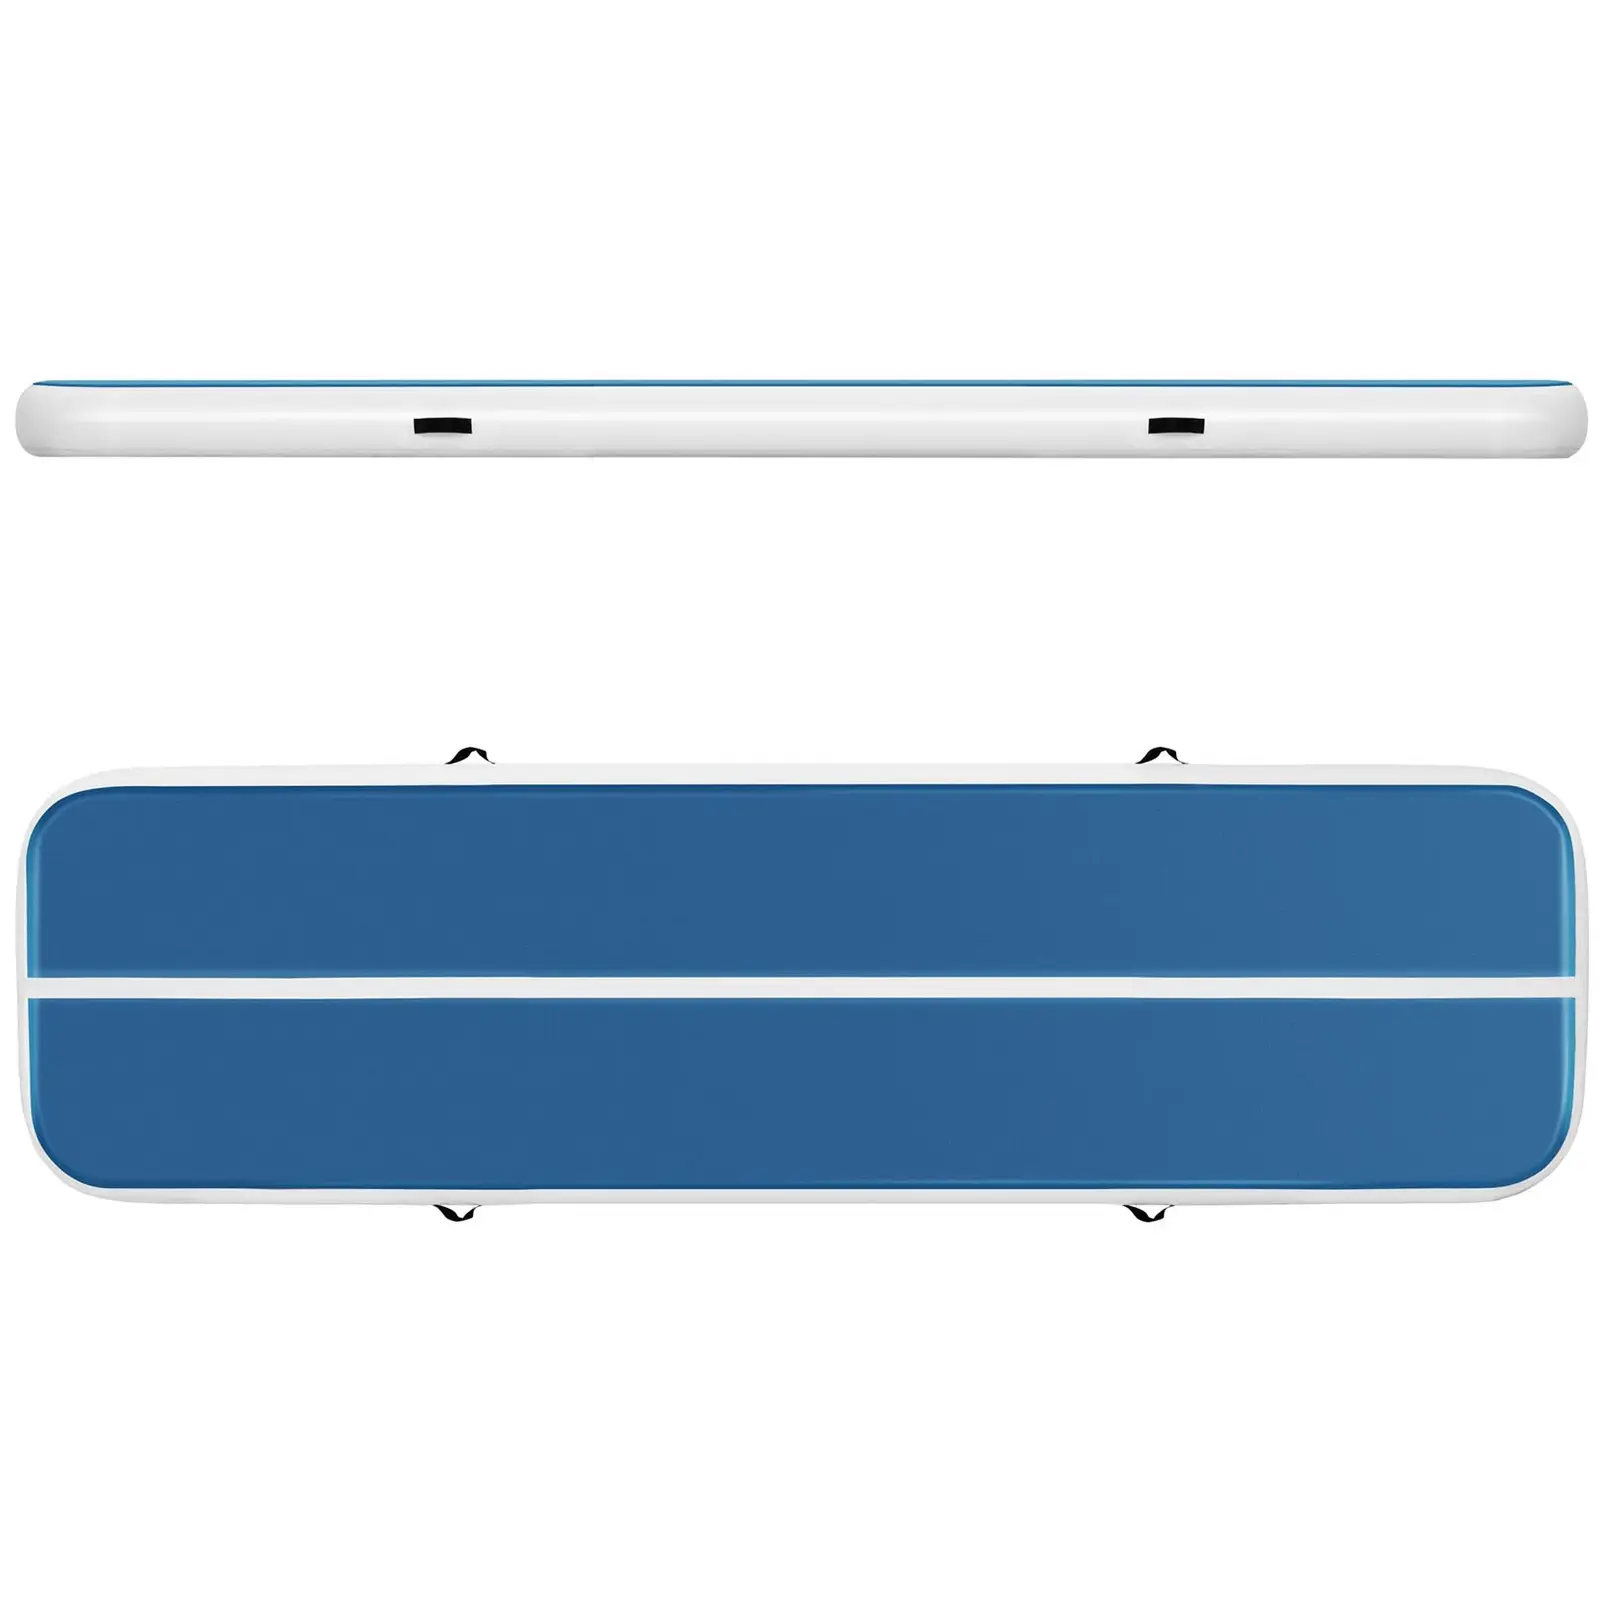 Uppblåsbar gymnastikmatta - 400 x 100 x 20 cm - blå och vit